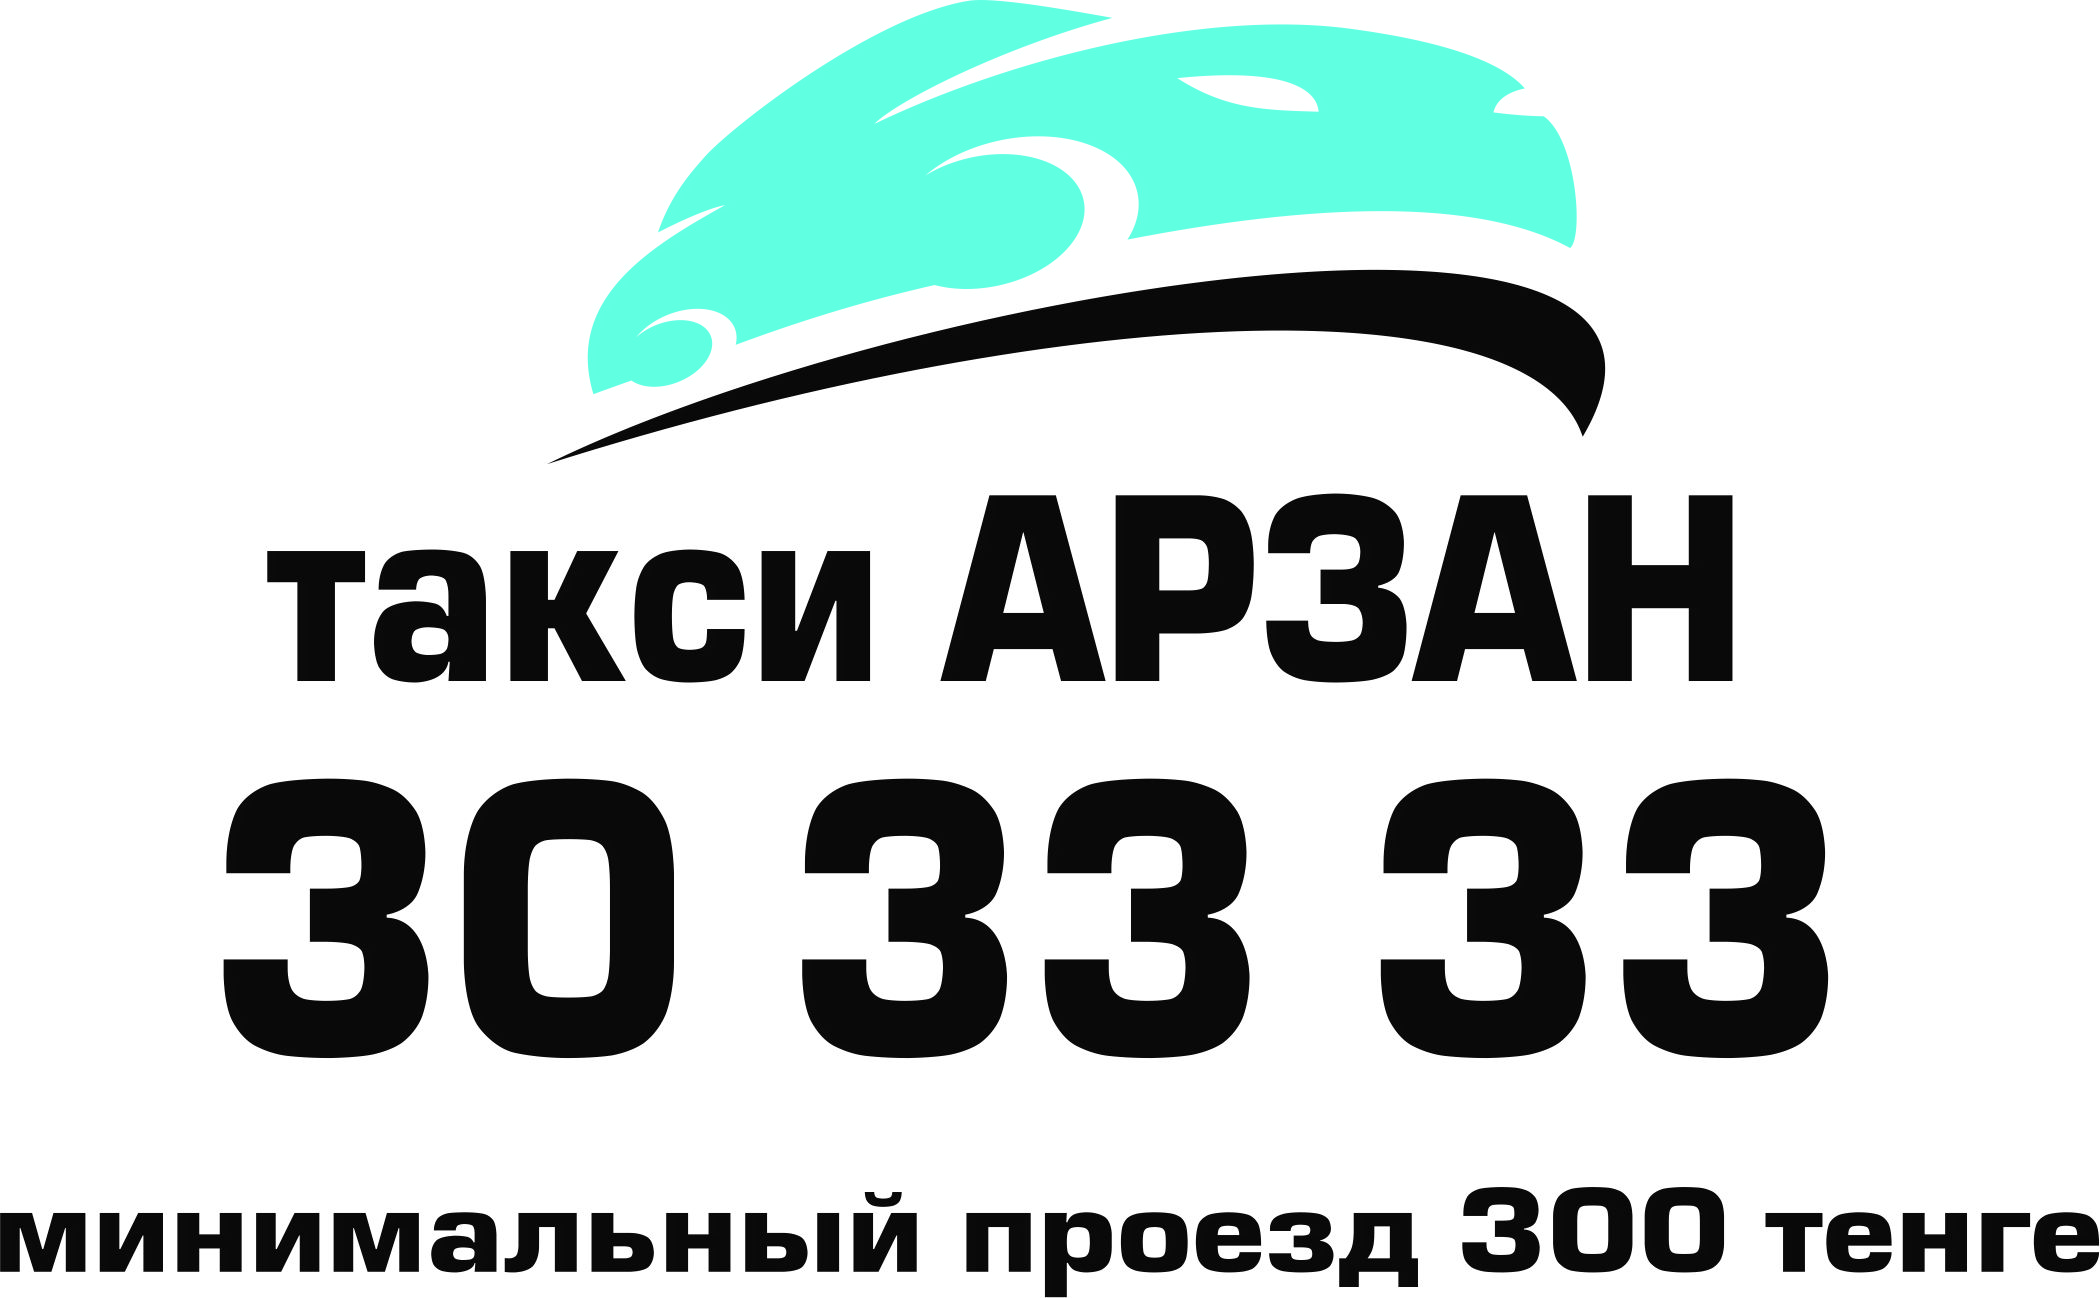 такси АРЗАН + ИНДРАЙВЕР 30 33 33